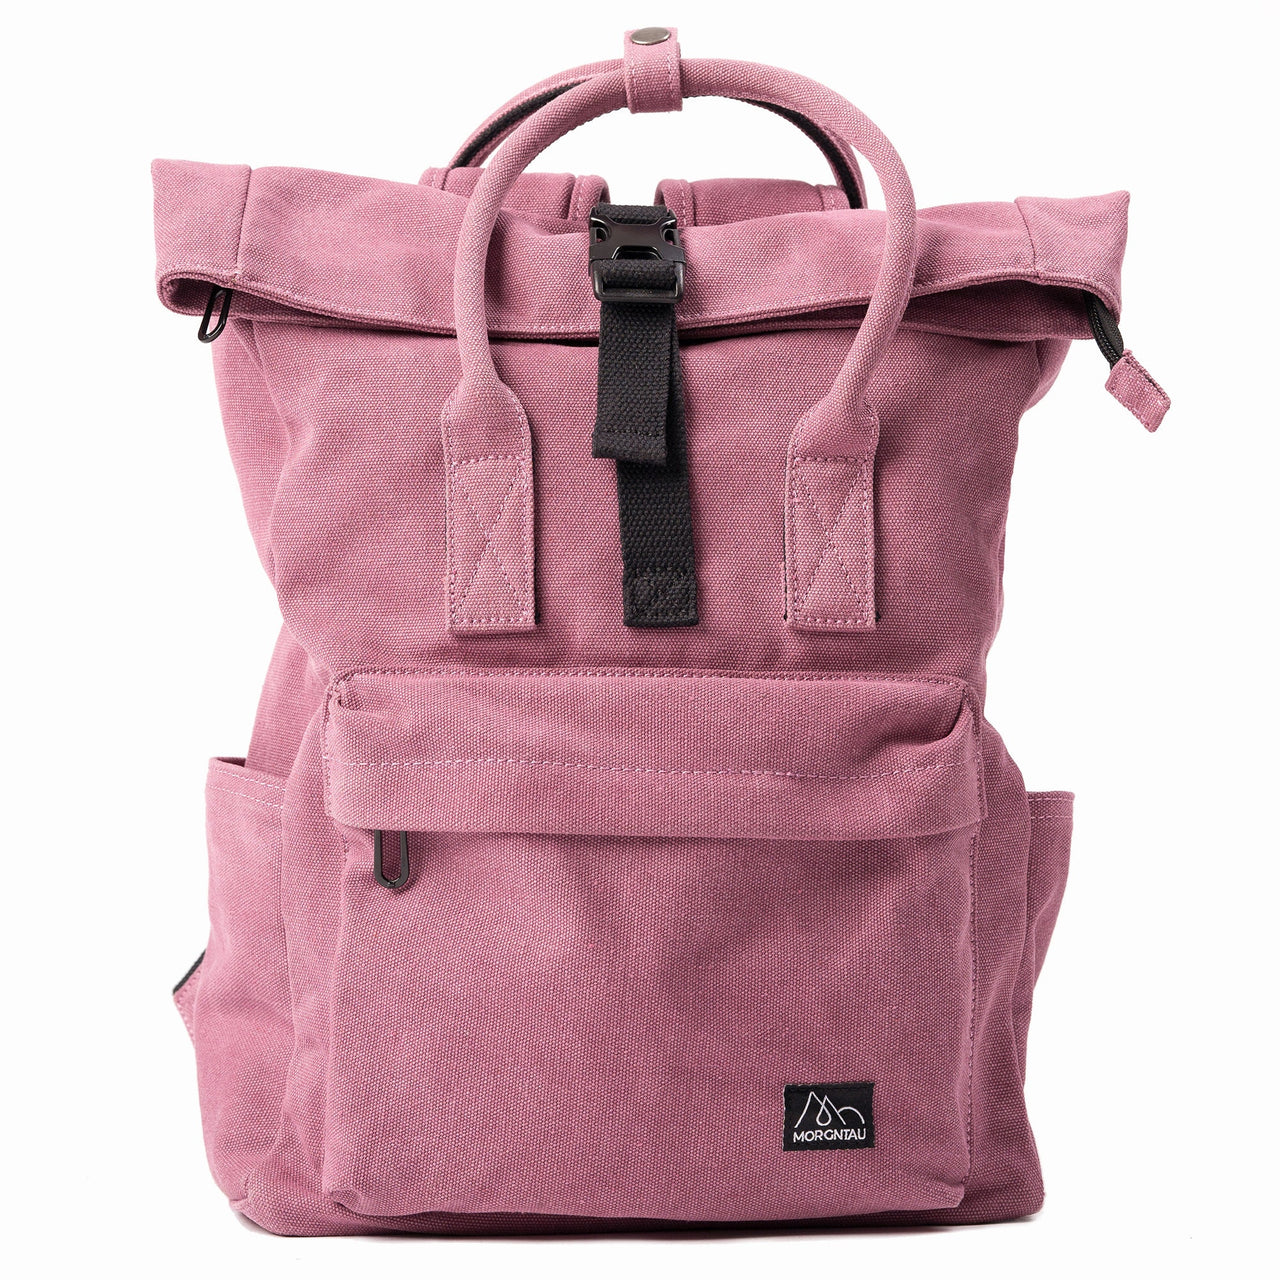 MORGNTAU Canvas Backpack Rolltop "Kolibri", Backpack made by hand, Leisure backpack for women and men, Laptop backpack